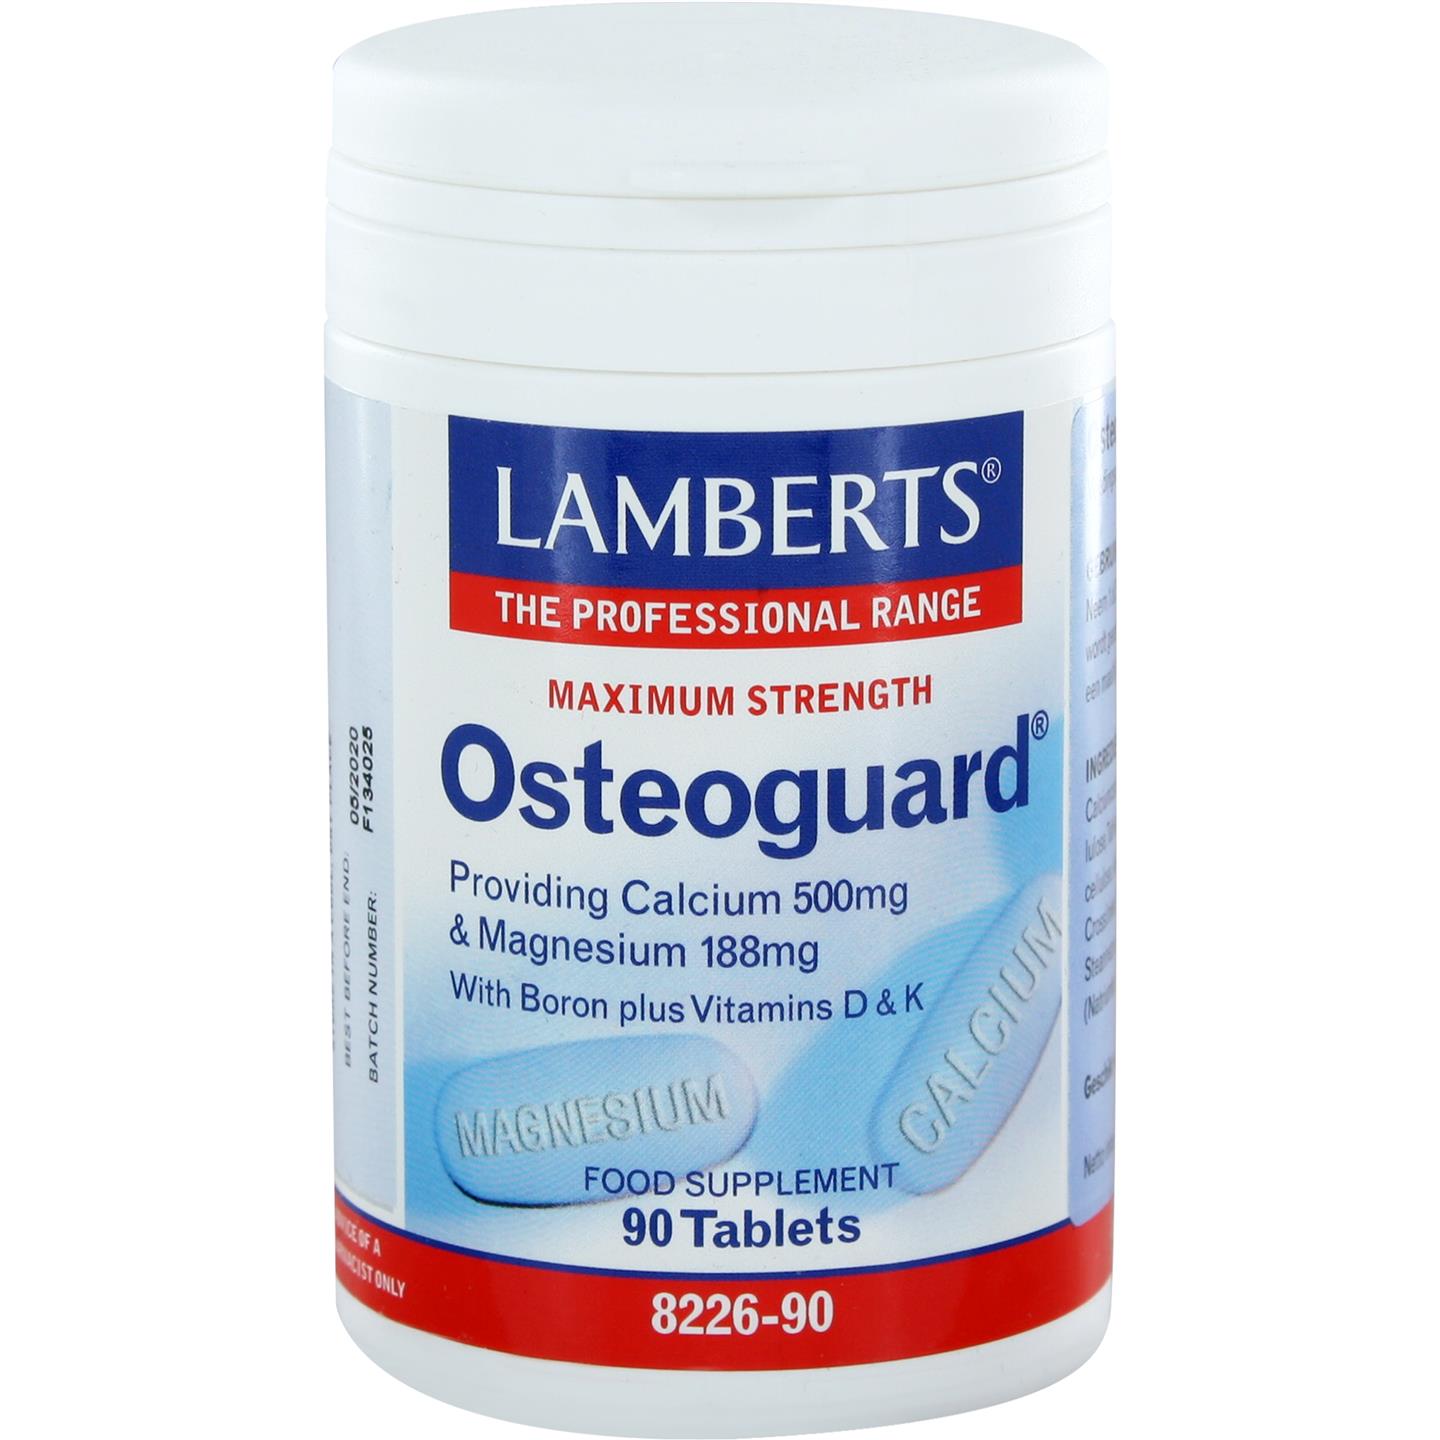 Osteoguard